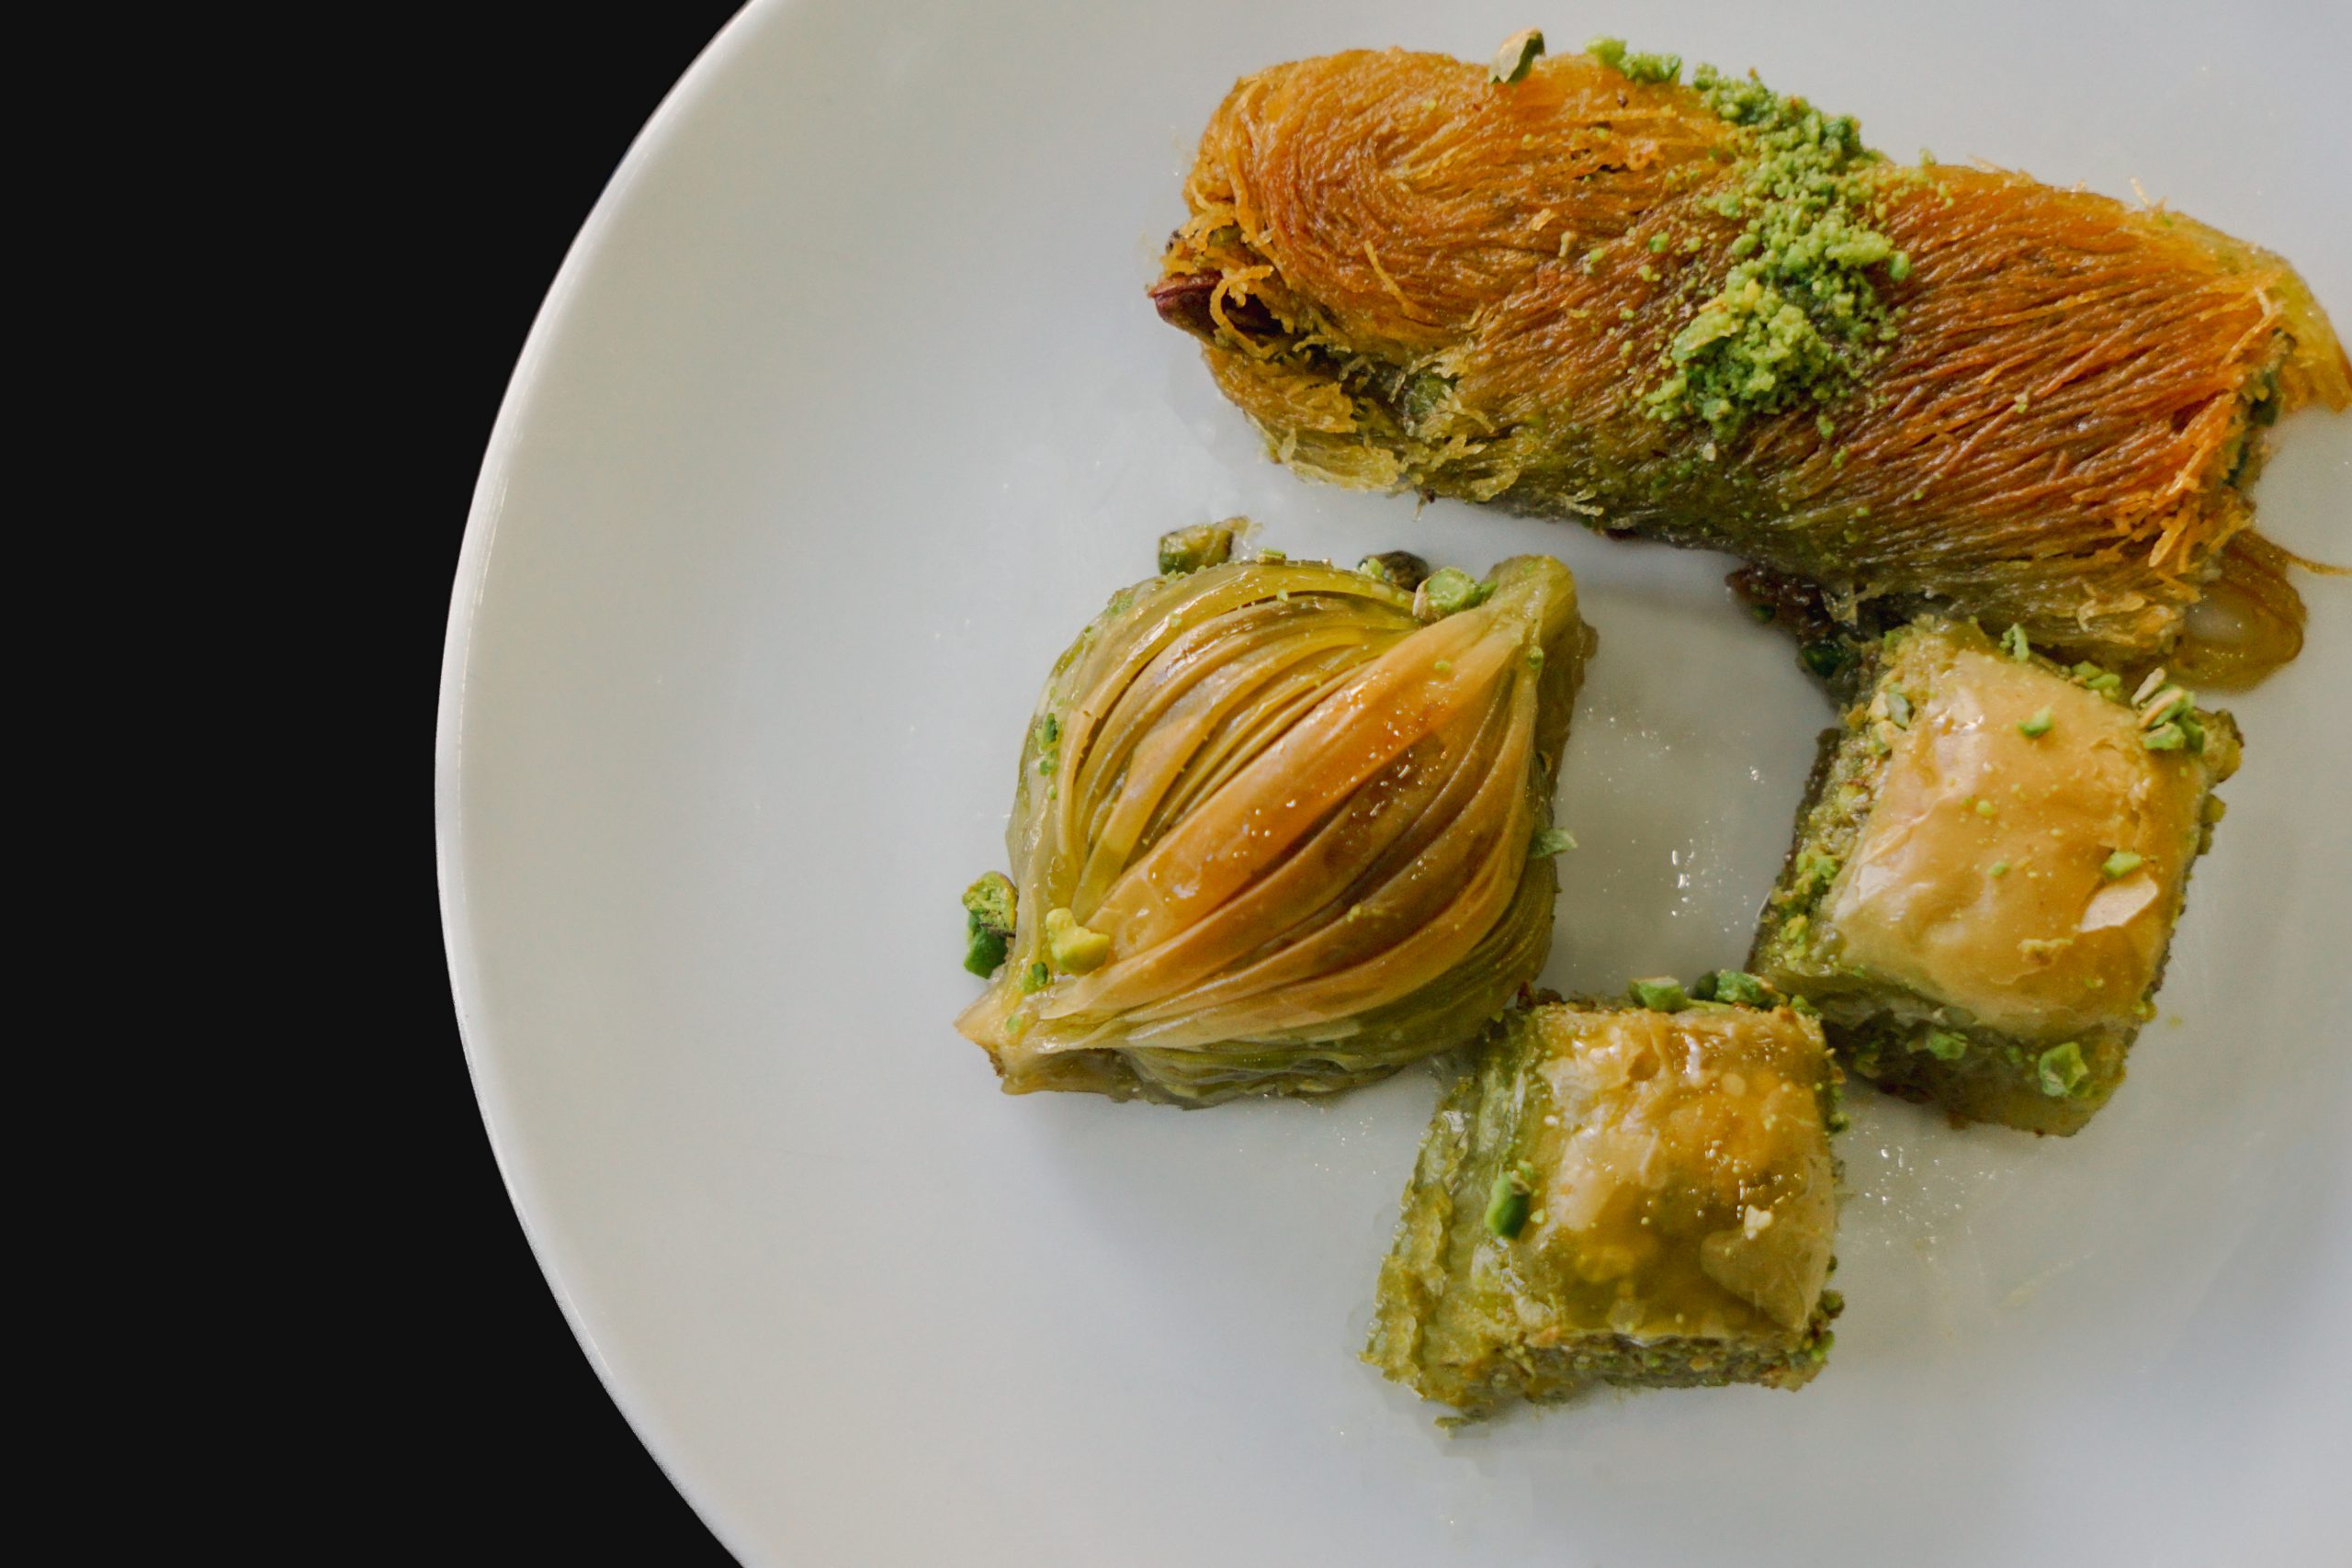 Turkish Baklava with pistachio